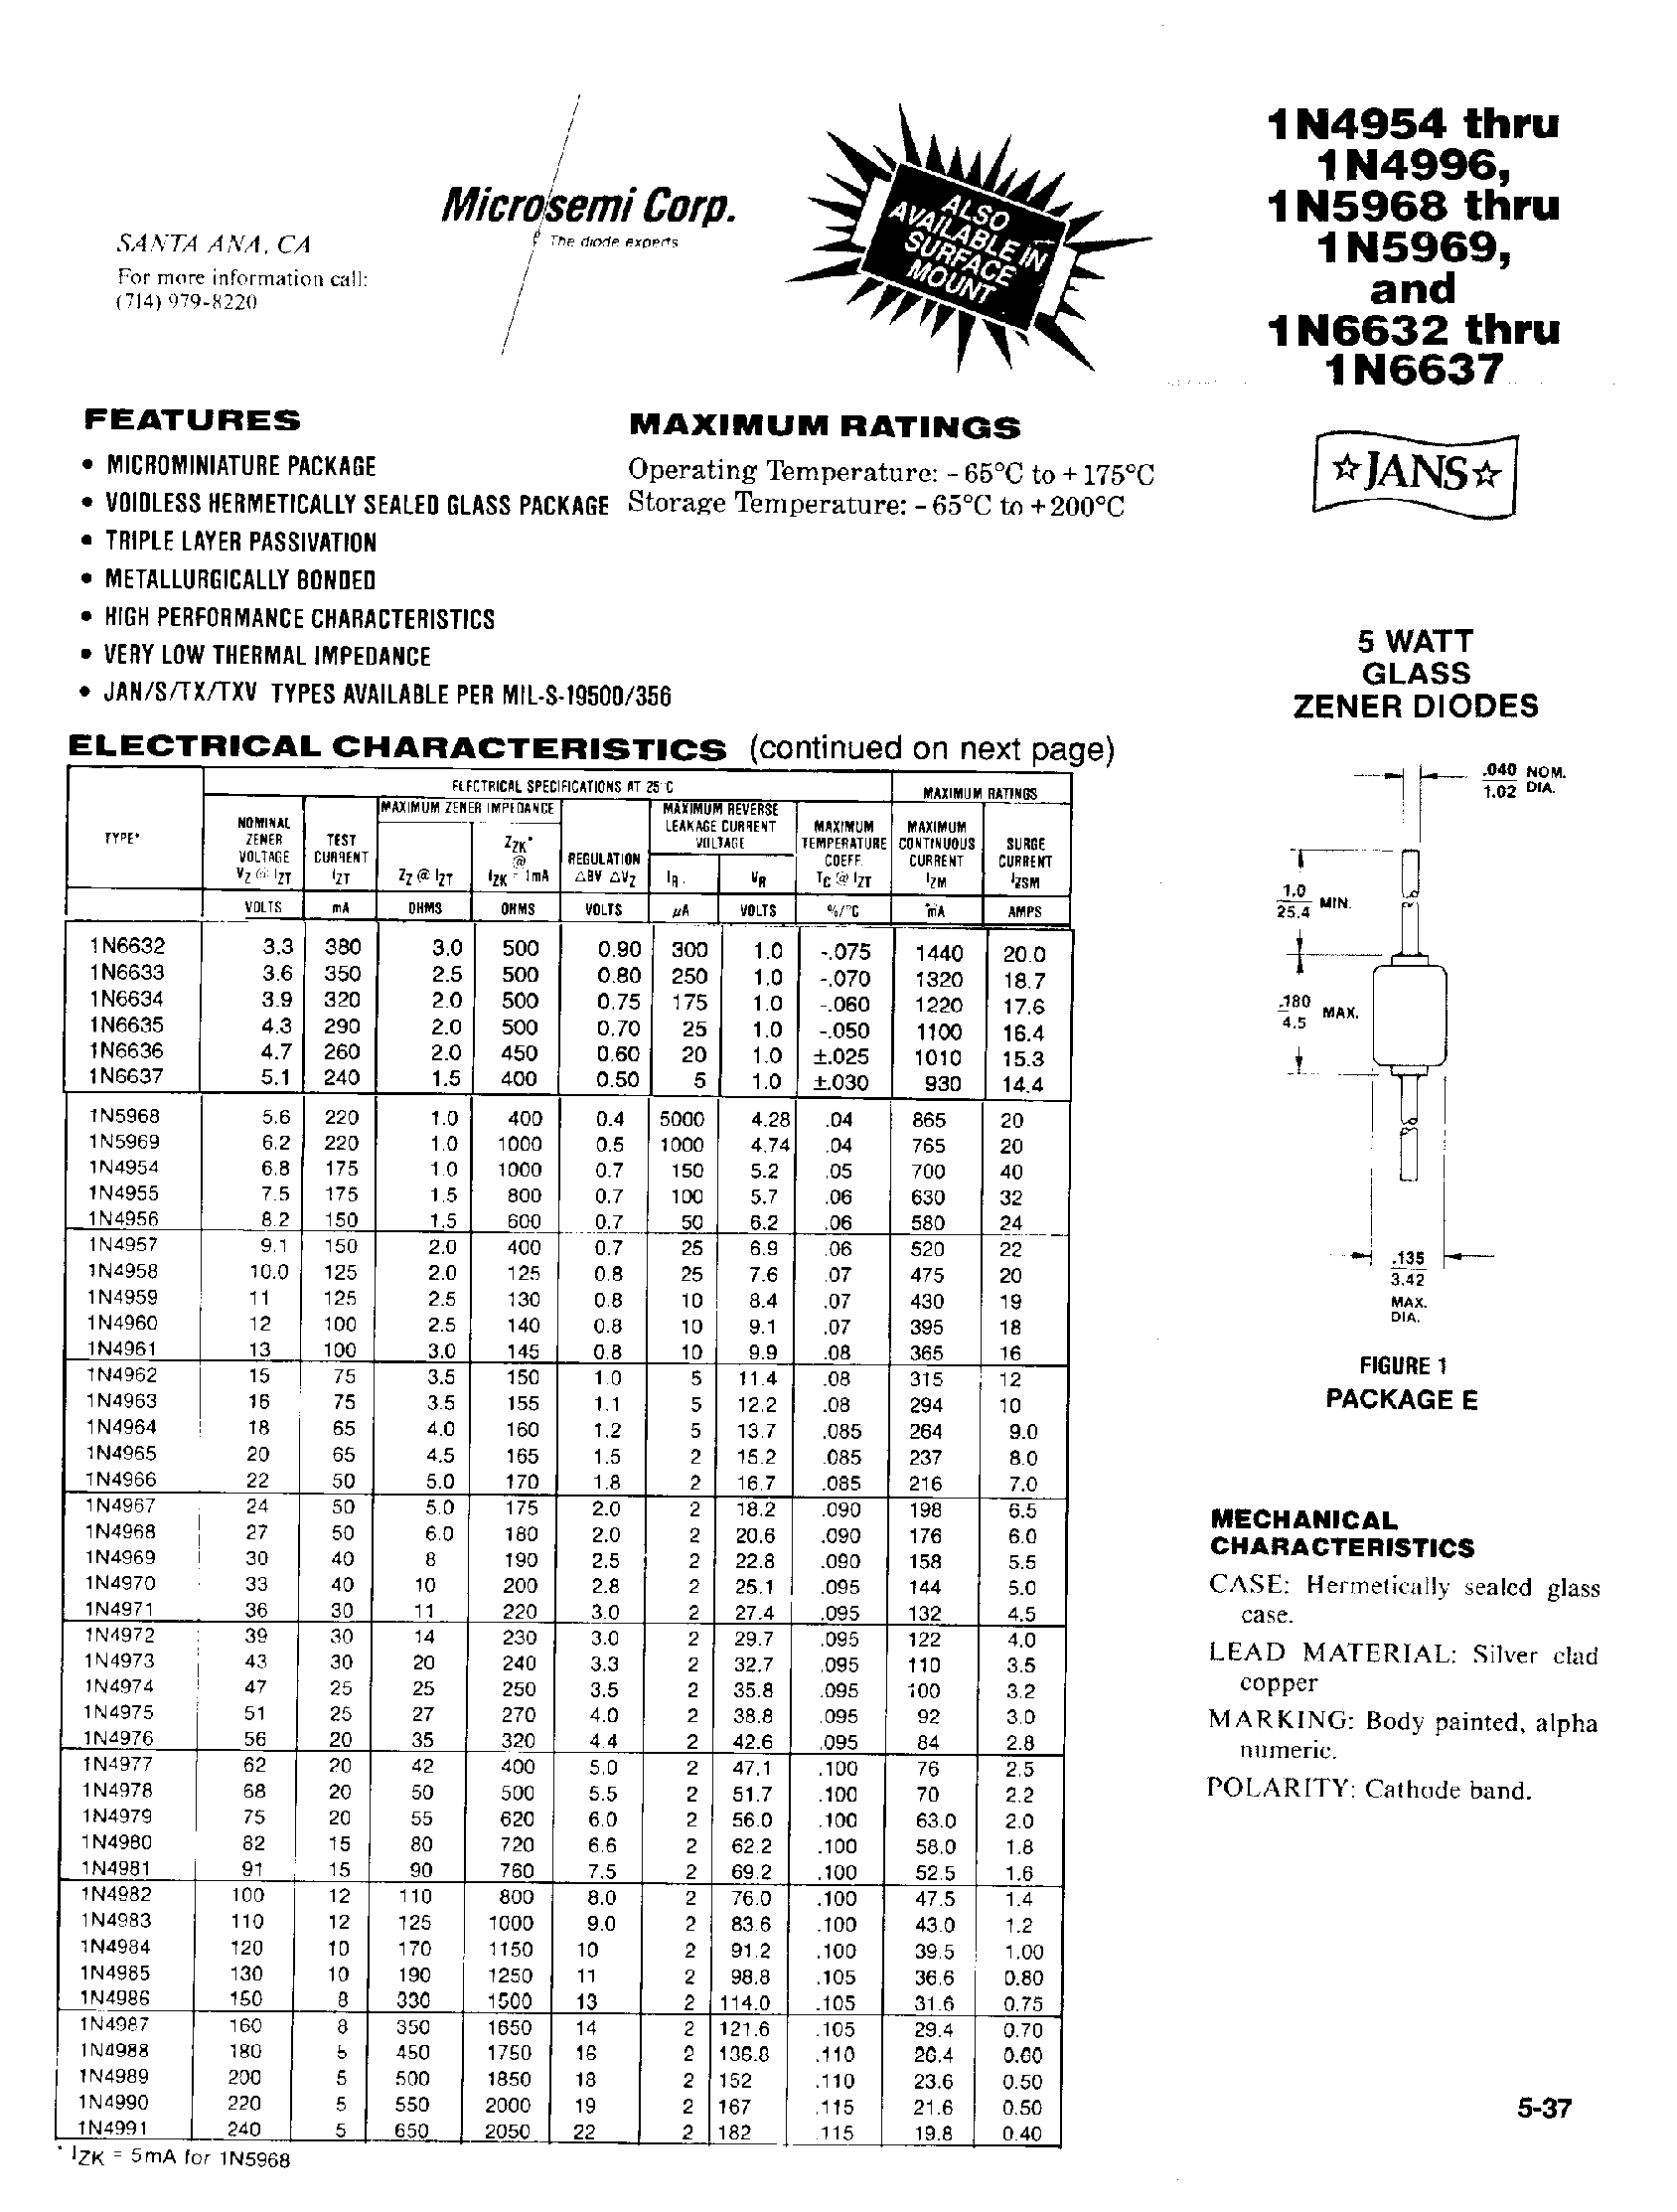 Datasheet 1N4985 - 5 WATT GLASS ZENER DIODES page 1